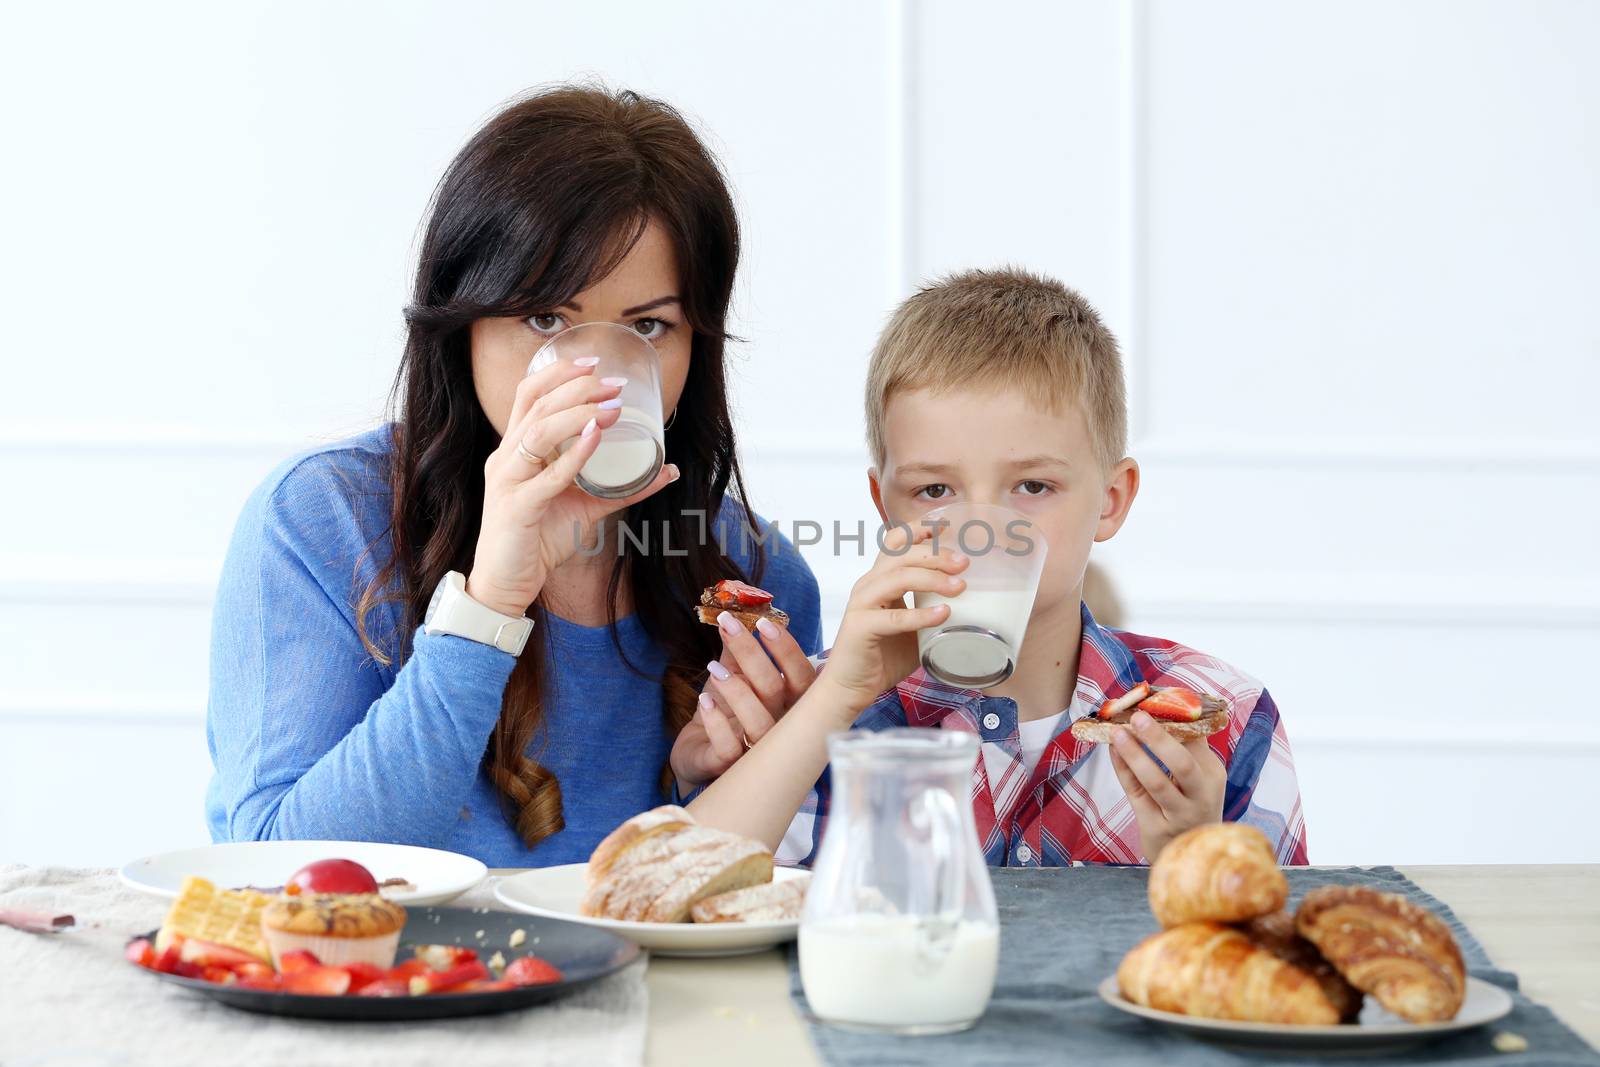 Family during breakfast by rufatjumali